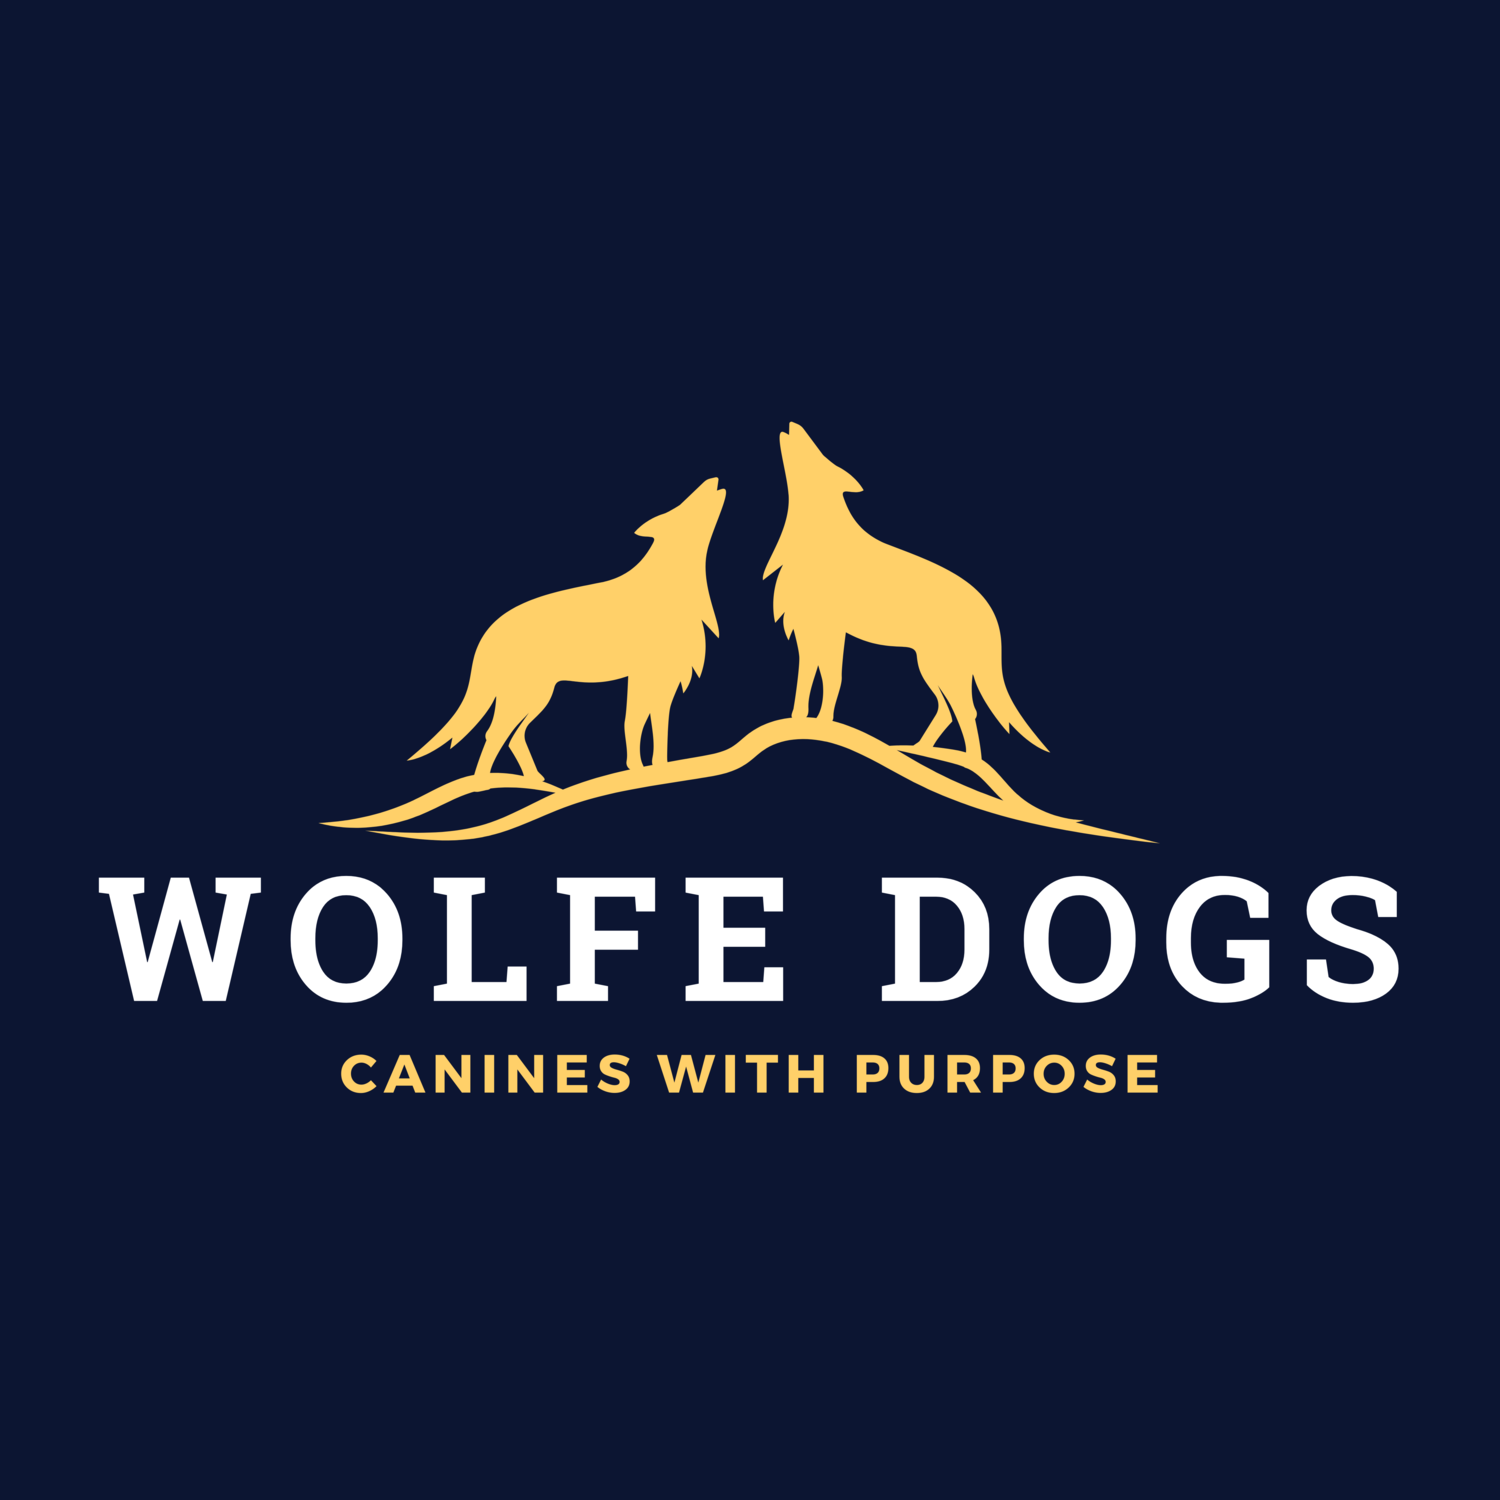 Wolfe Dogs